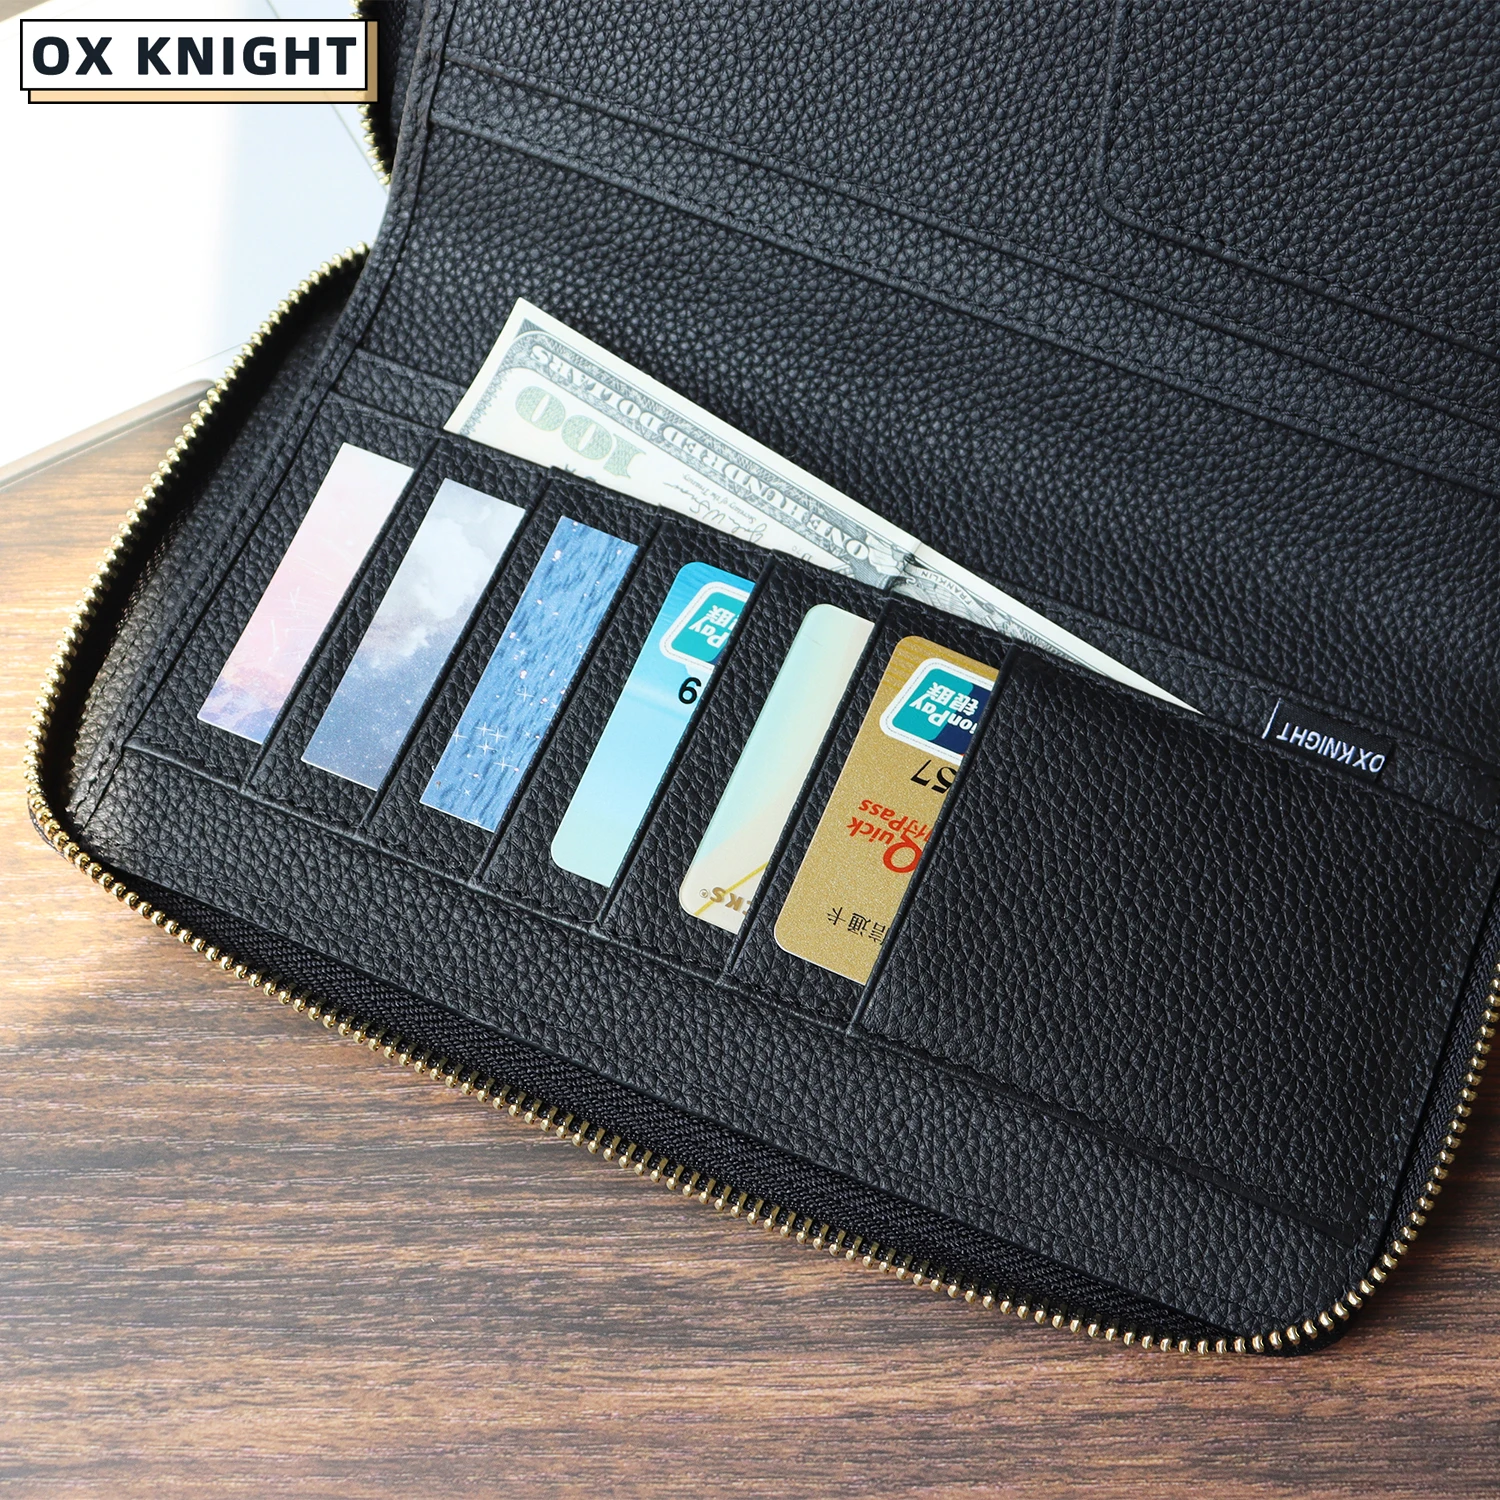 OX KNIGHT Genuine Leather Zipper Organizer Pebbled Grain Cowhide Budget Planner Cardholder Multifunction Agenda Journal Diary